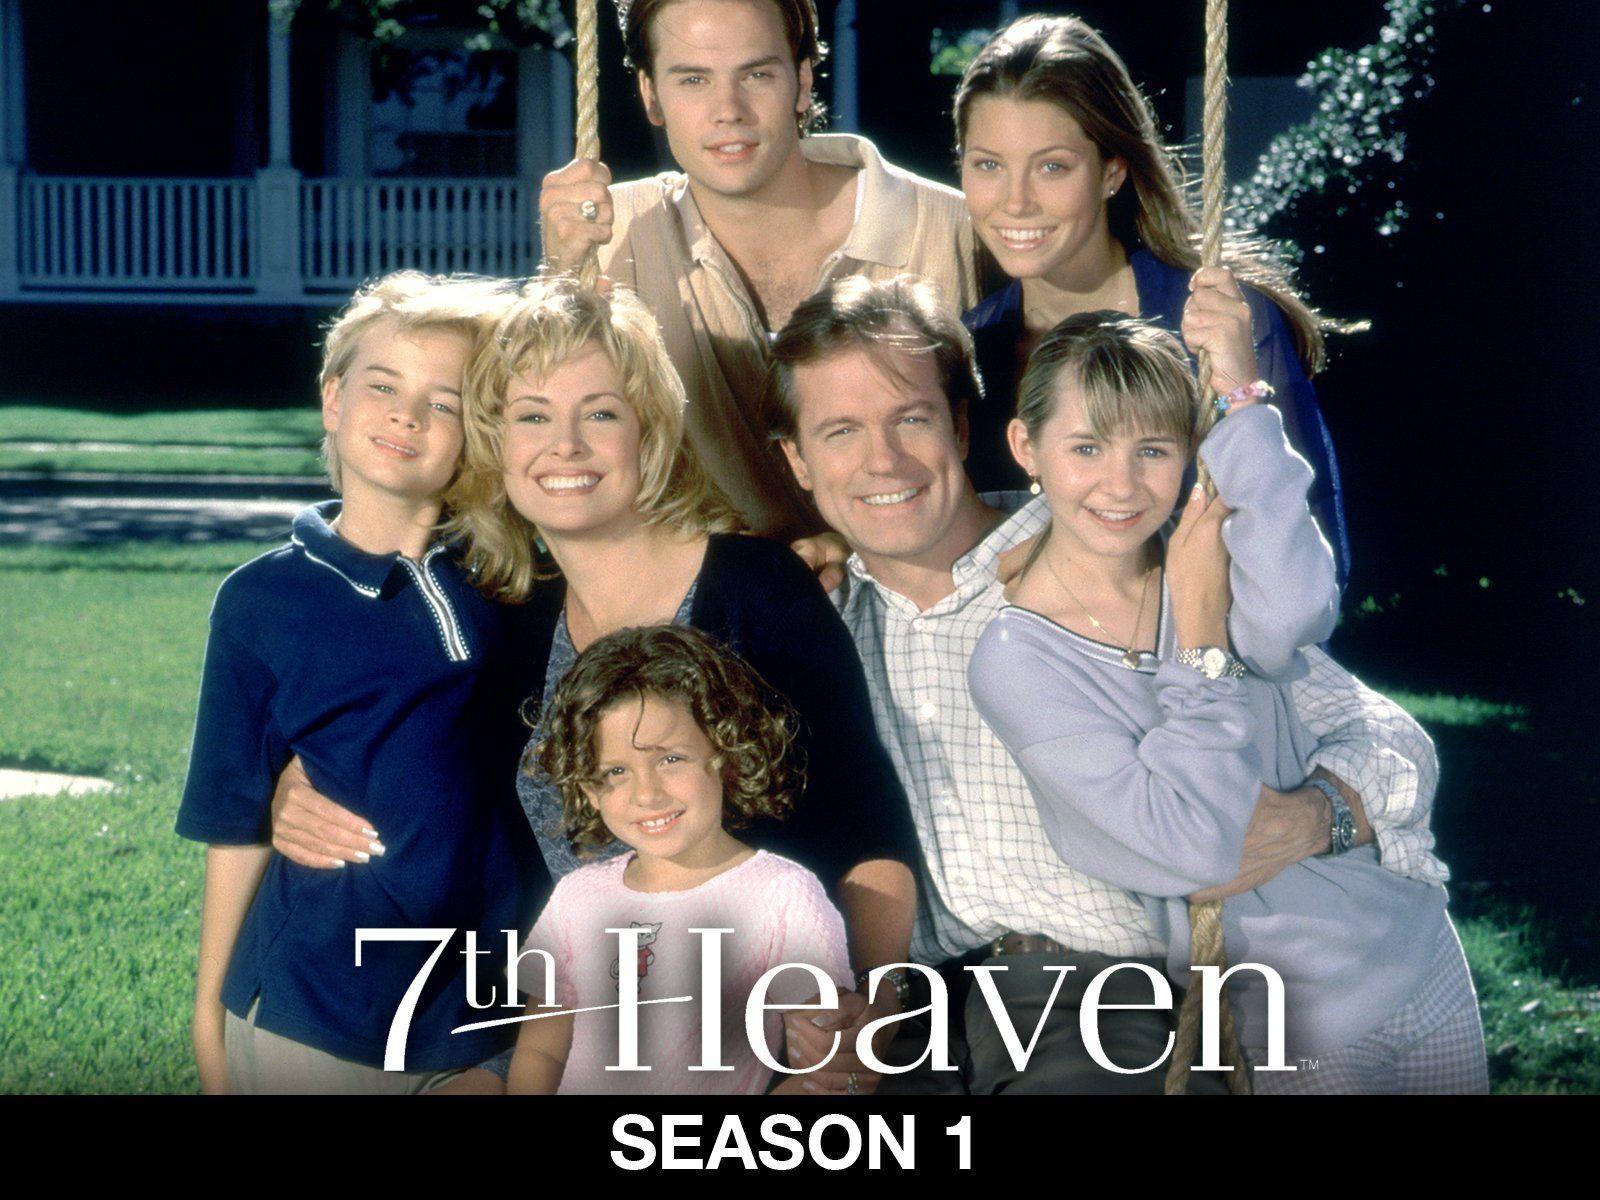 7th Heaven: Stephen Collins, Catherine Hicks, David